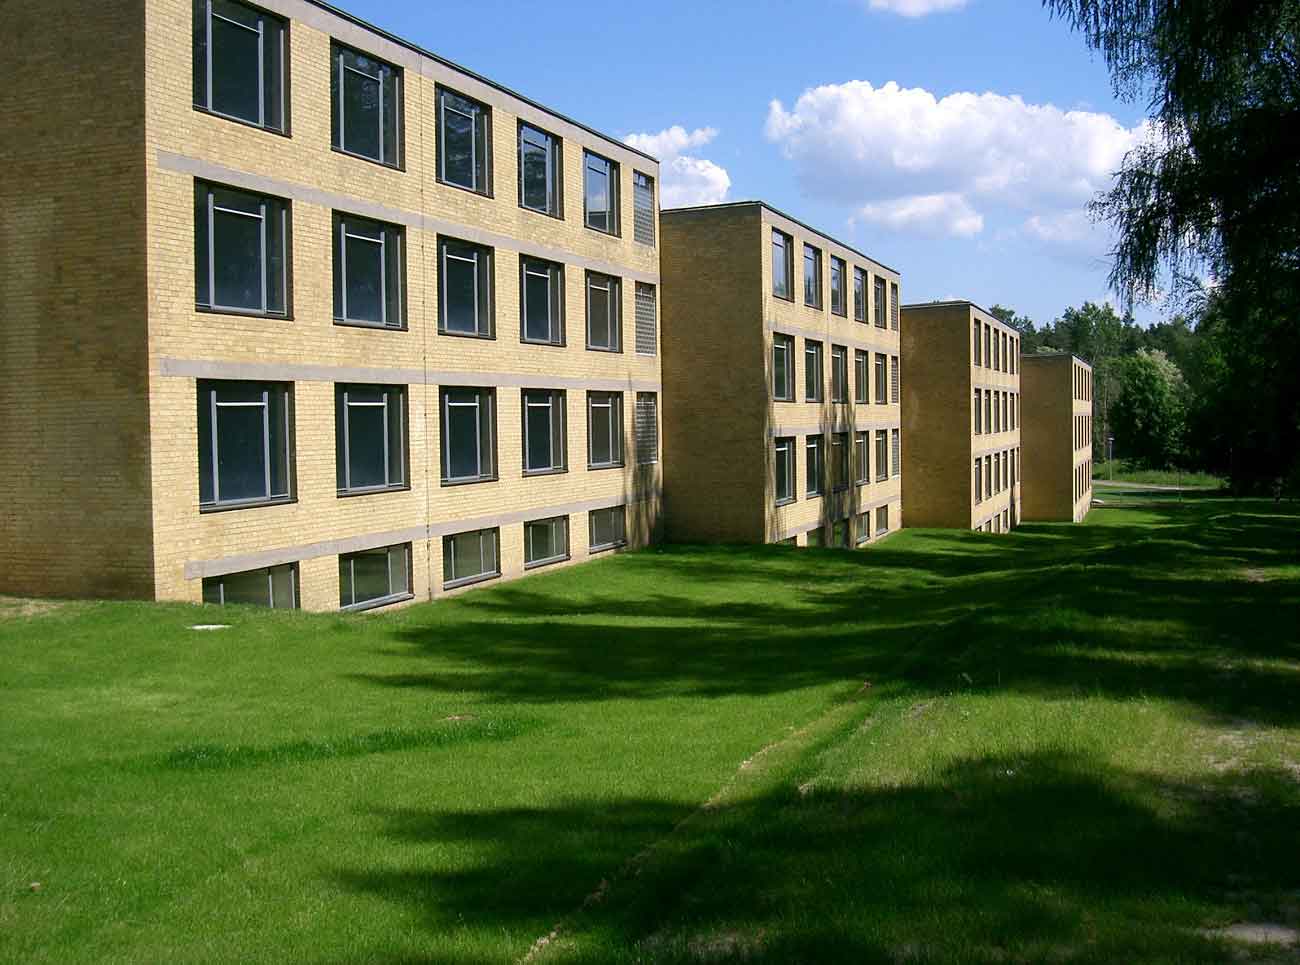 Early bauhaus architecture: adgb trade union school, bernau, germany - designed by hannes meyer and hans wittwer, 1930. - © dabbelju